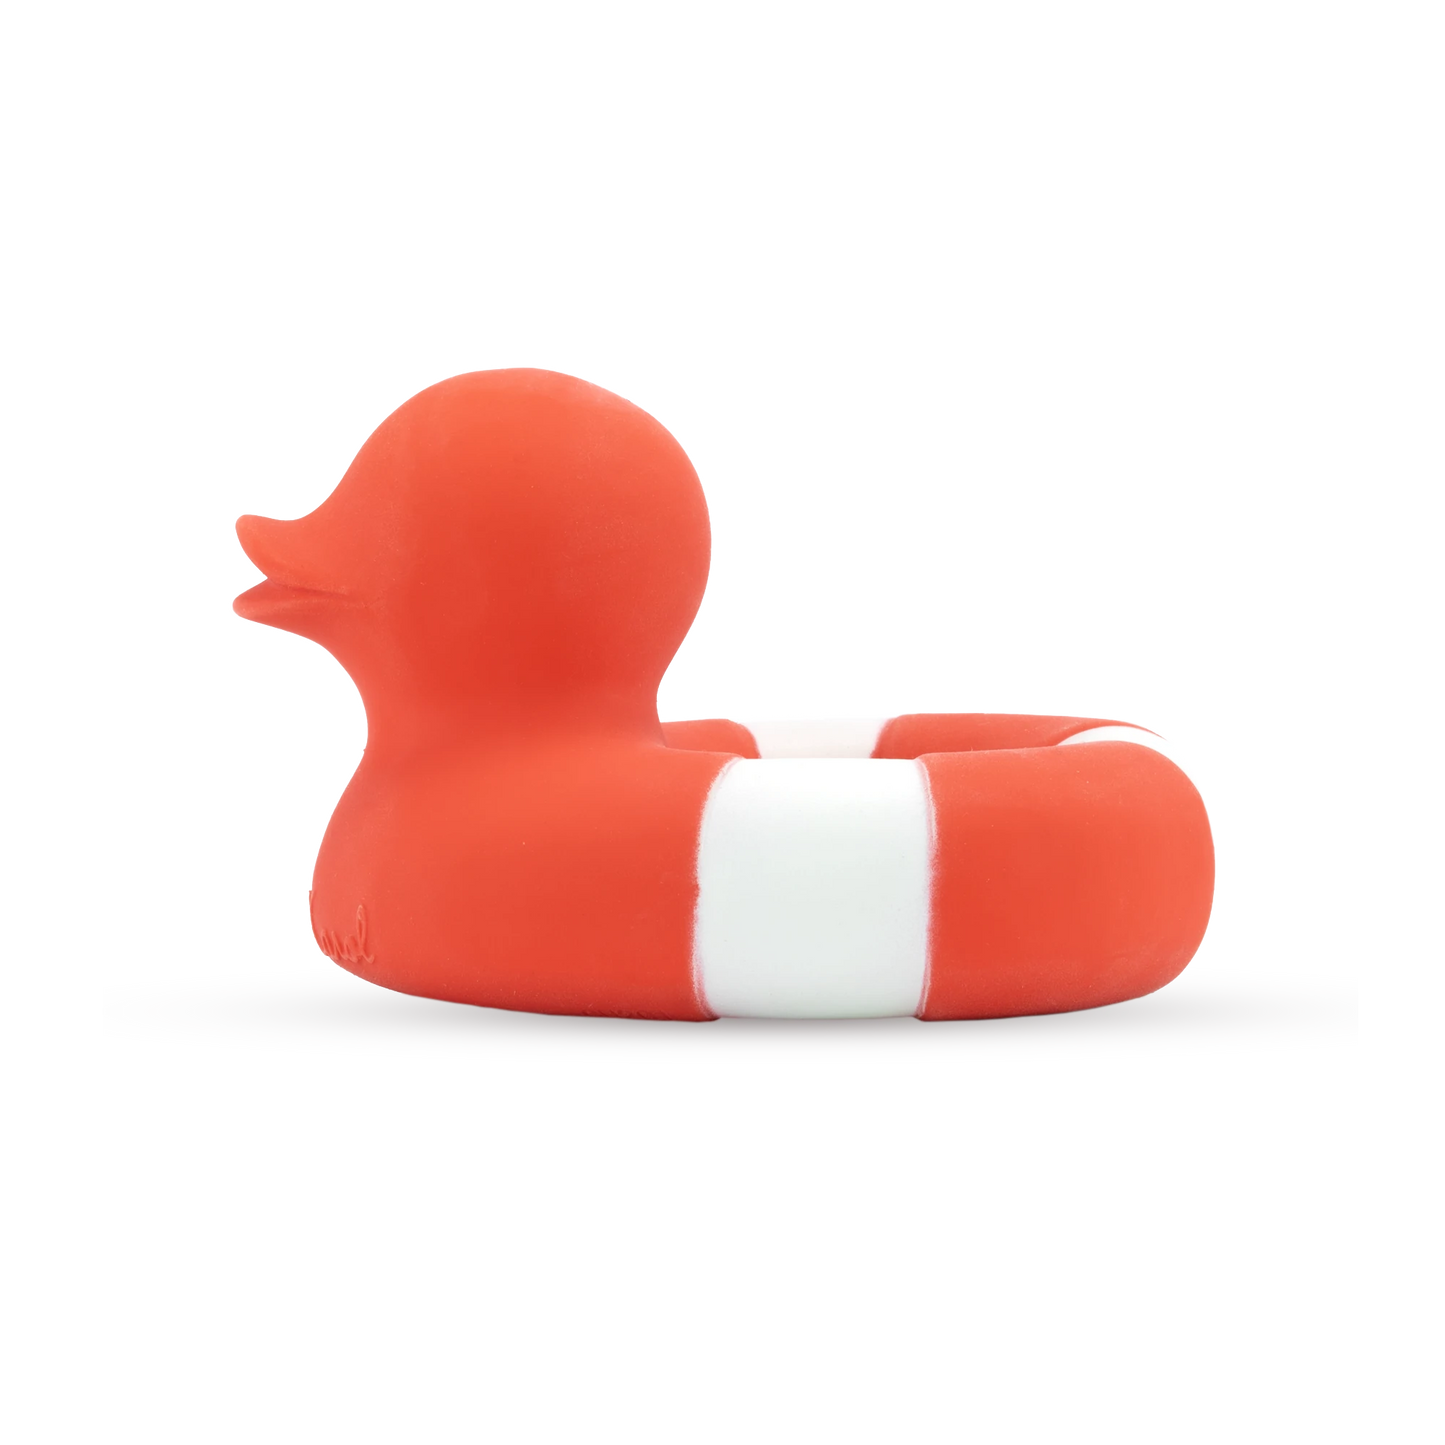 OLI & CAROL - Flo the Floatie Red - Teether & Bath Toy - BambiniJO | Buy Online | Jordan